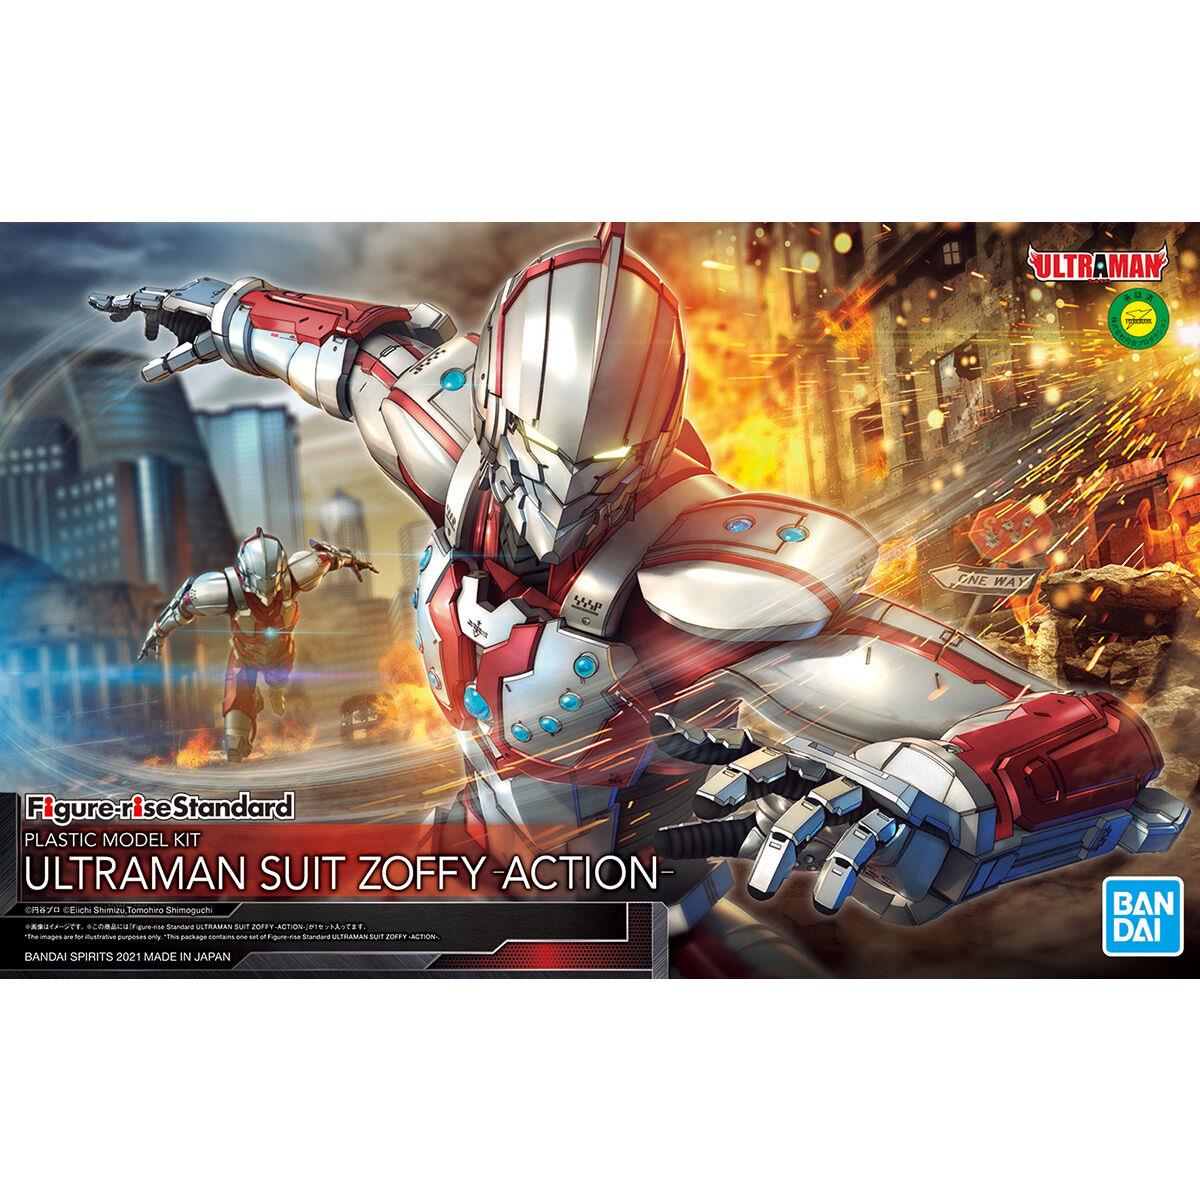 Ultraman: Ultraman Suit Zoffy Action Figure-Rise Standard Model